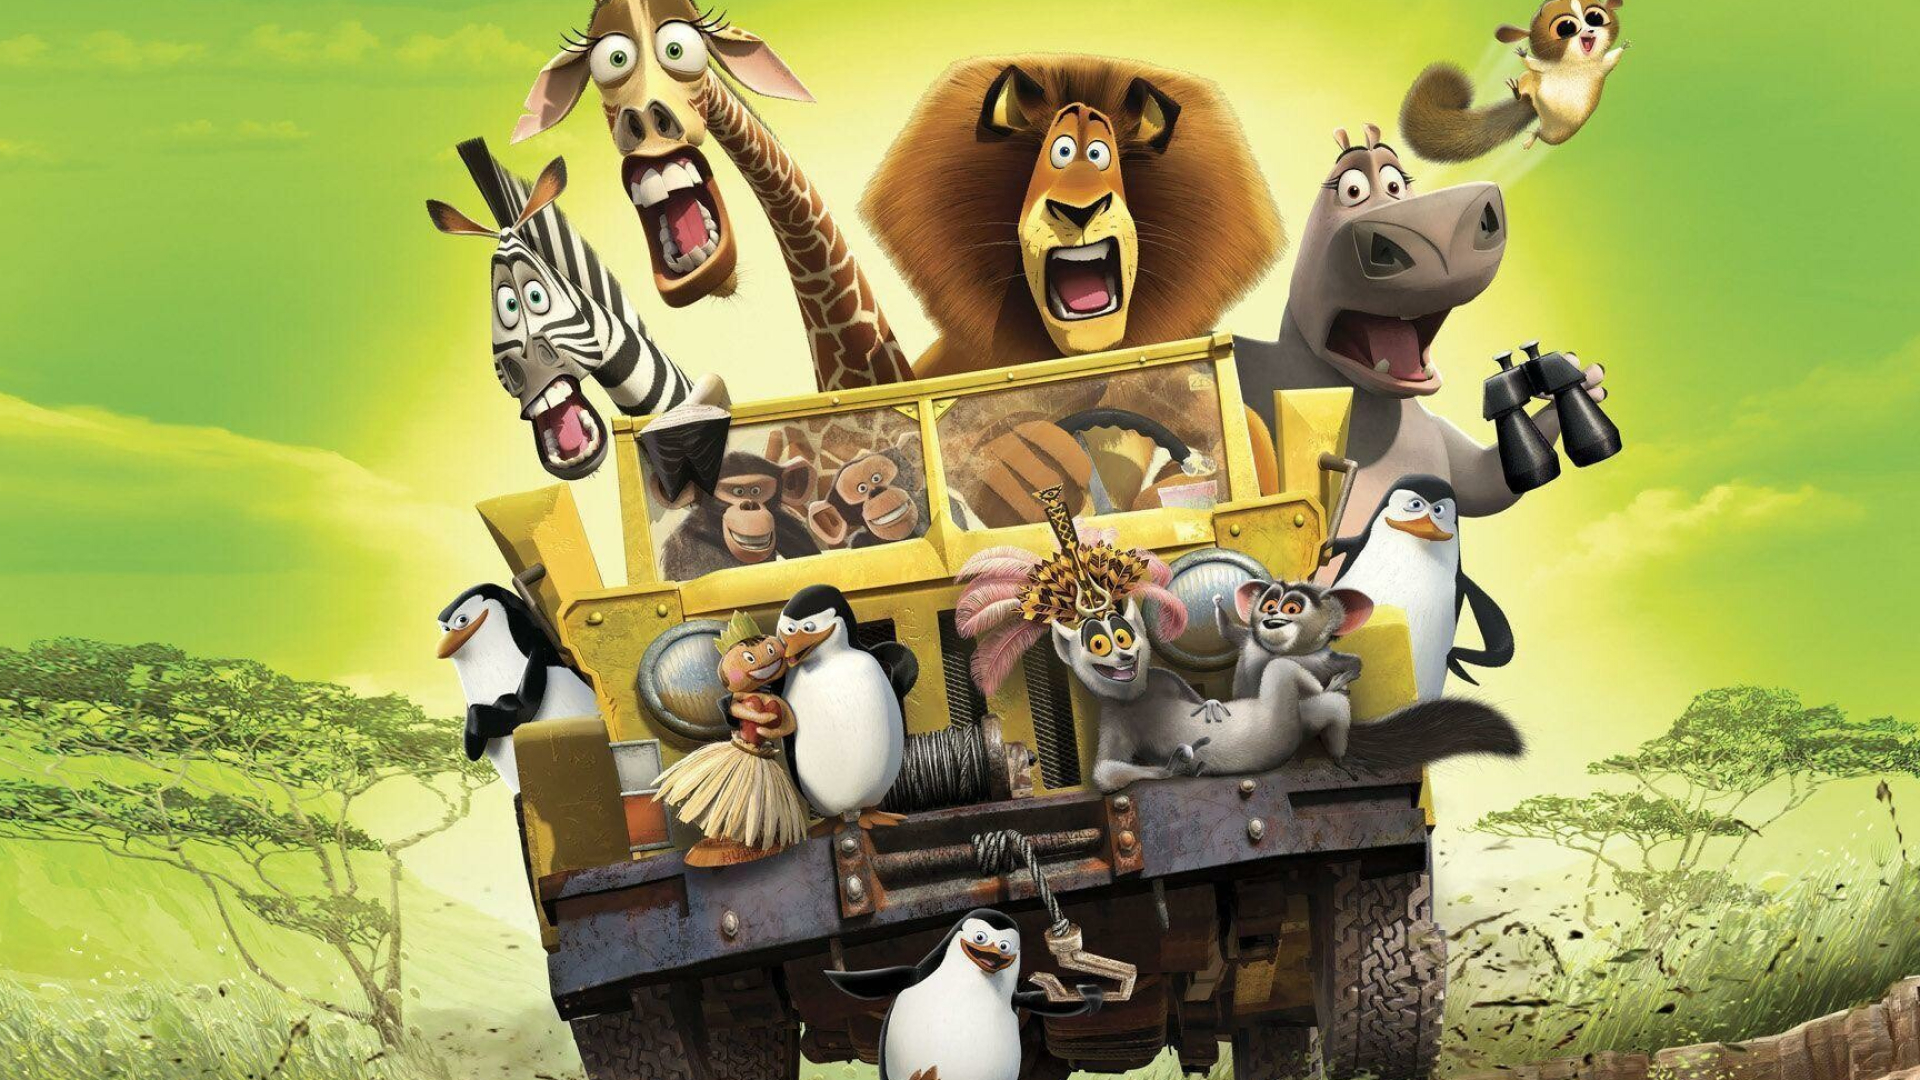 Madagascar (Movie): Dream Works animated comedy, New York City zoo animals. 1920x1080 Full HD Wallpaper.